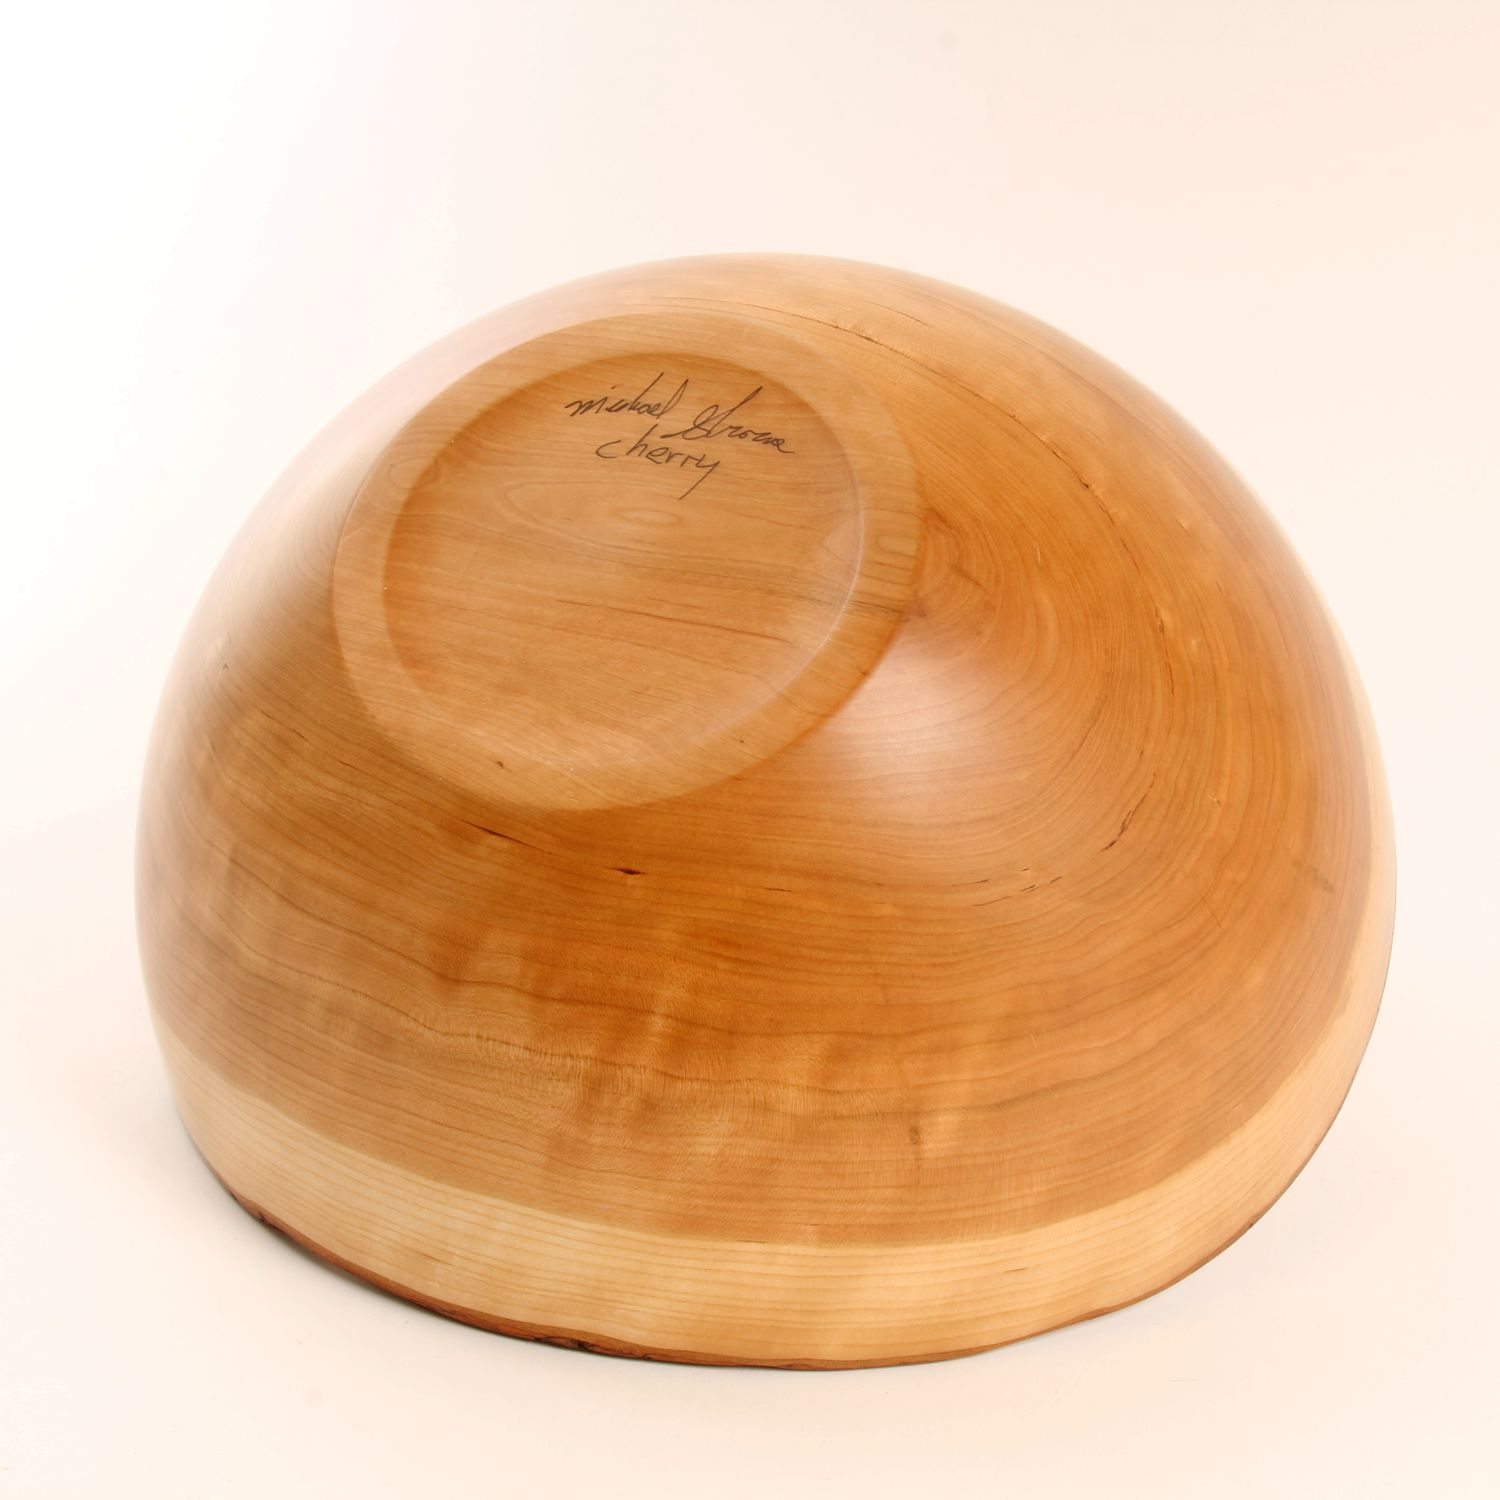 Michael Sbrocca: Natural Rim Cherry Bowl Product Image 2 of 4